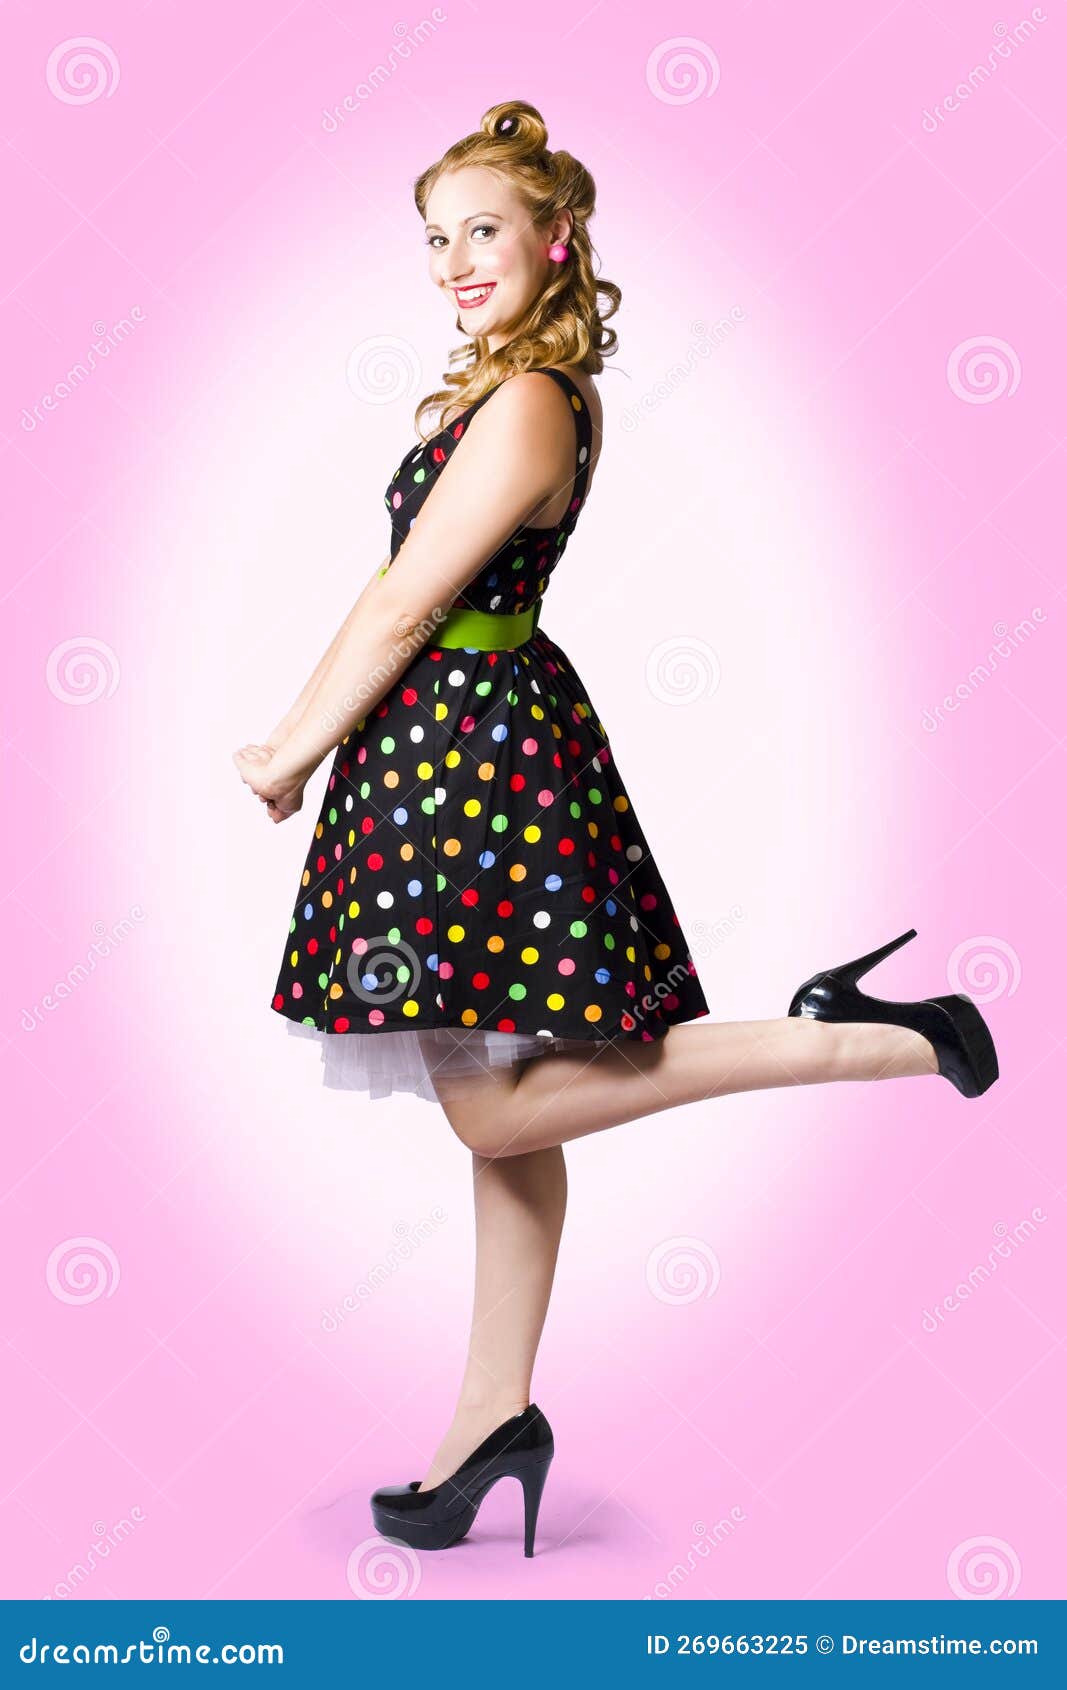 Female woman dressed in a rockabilly fashion posing next to a